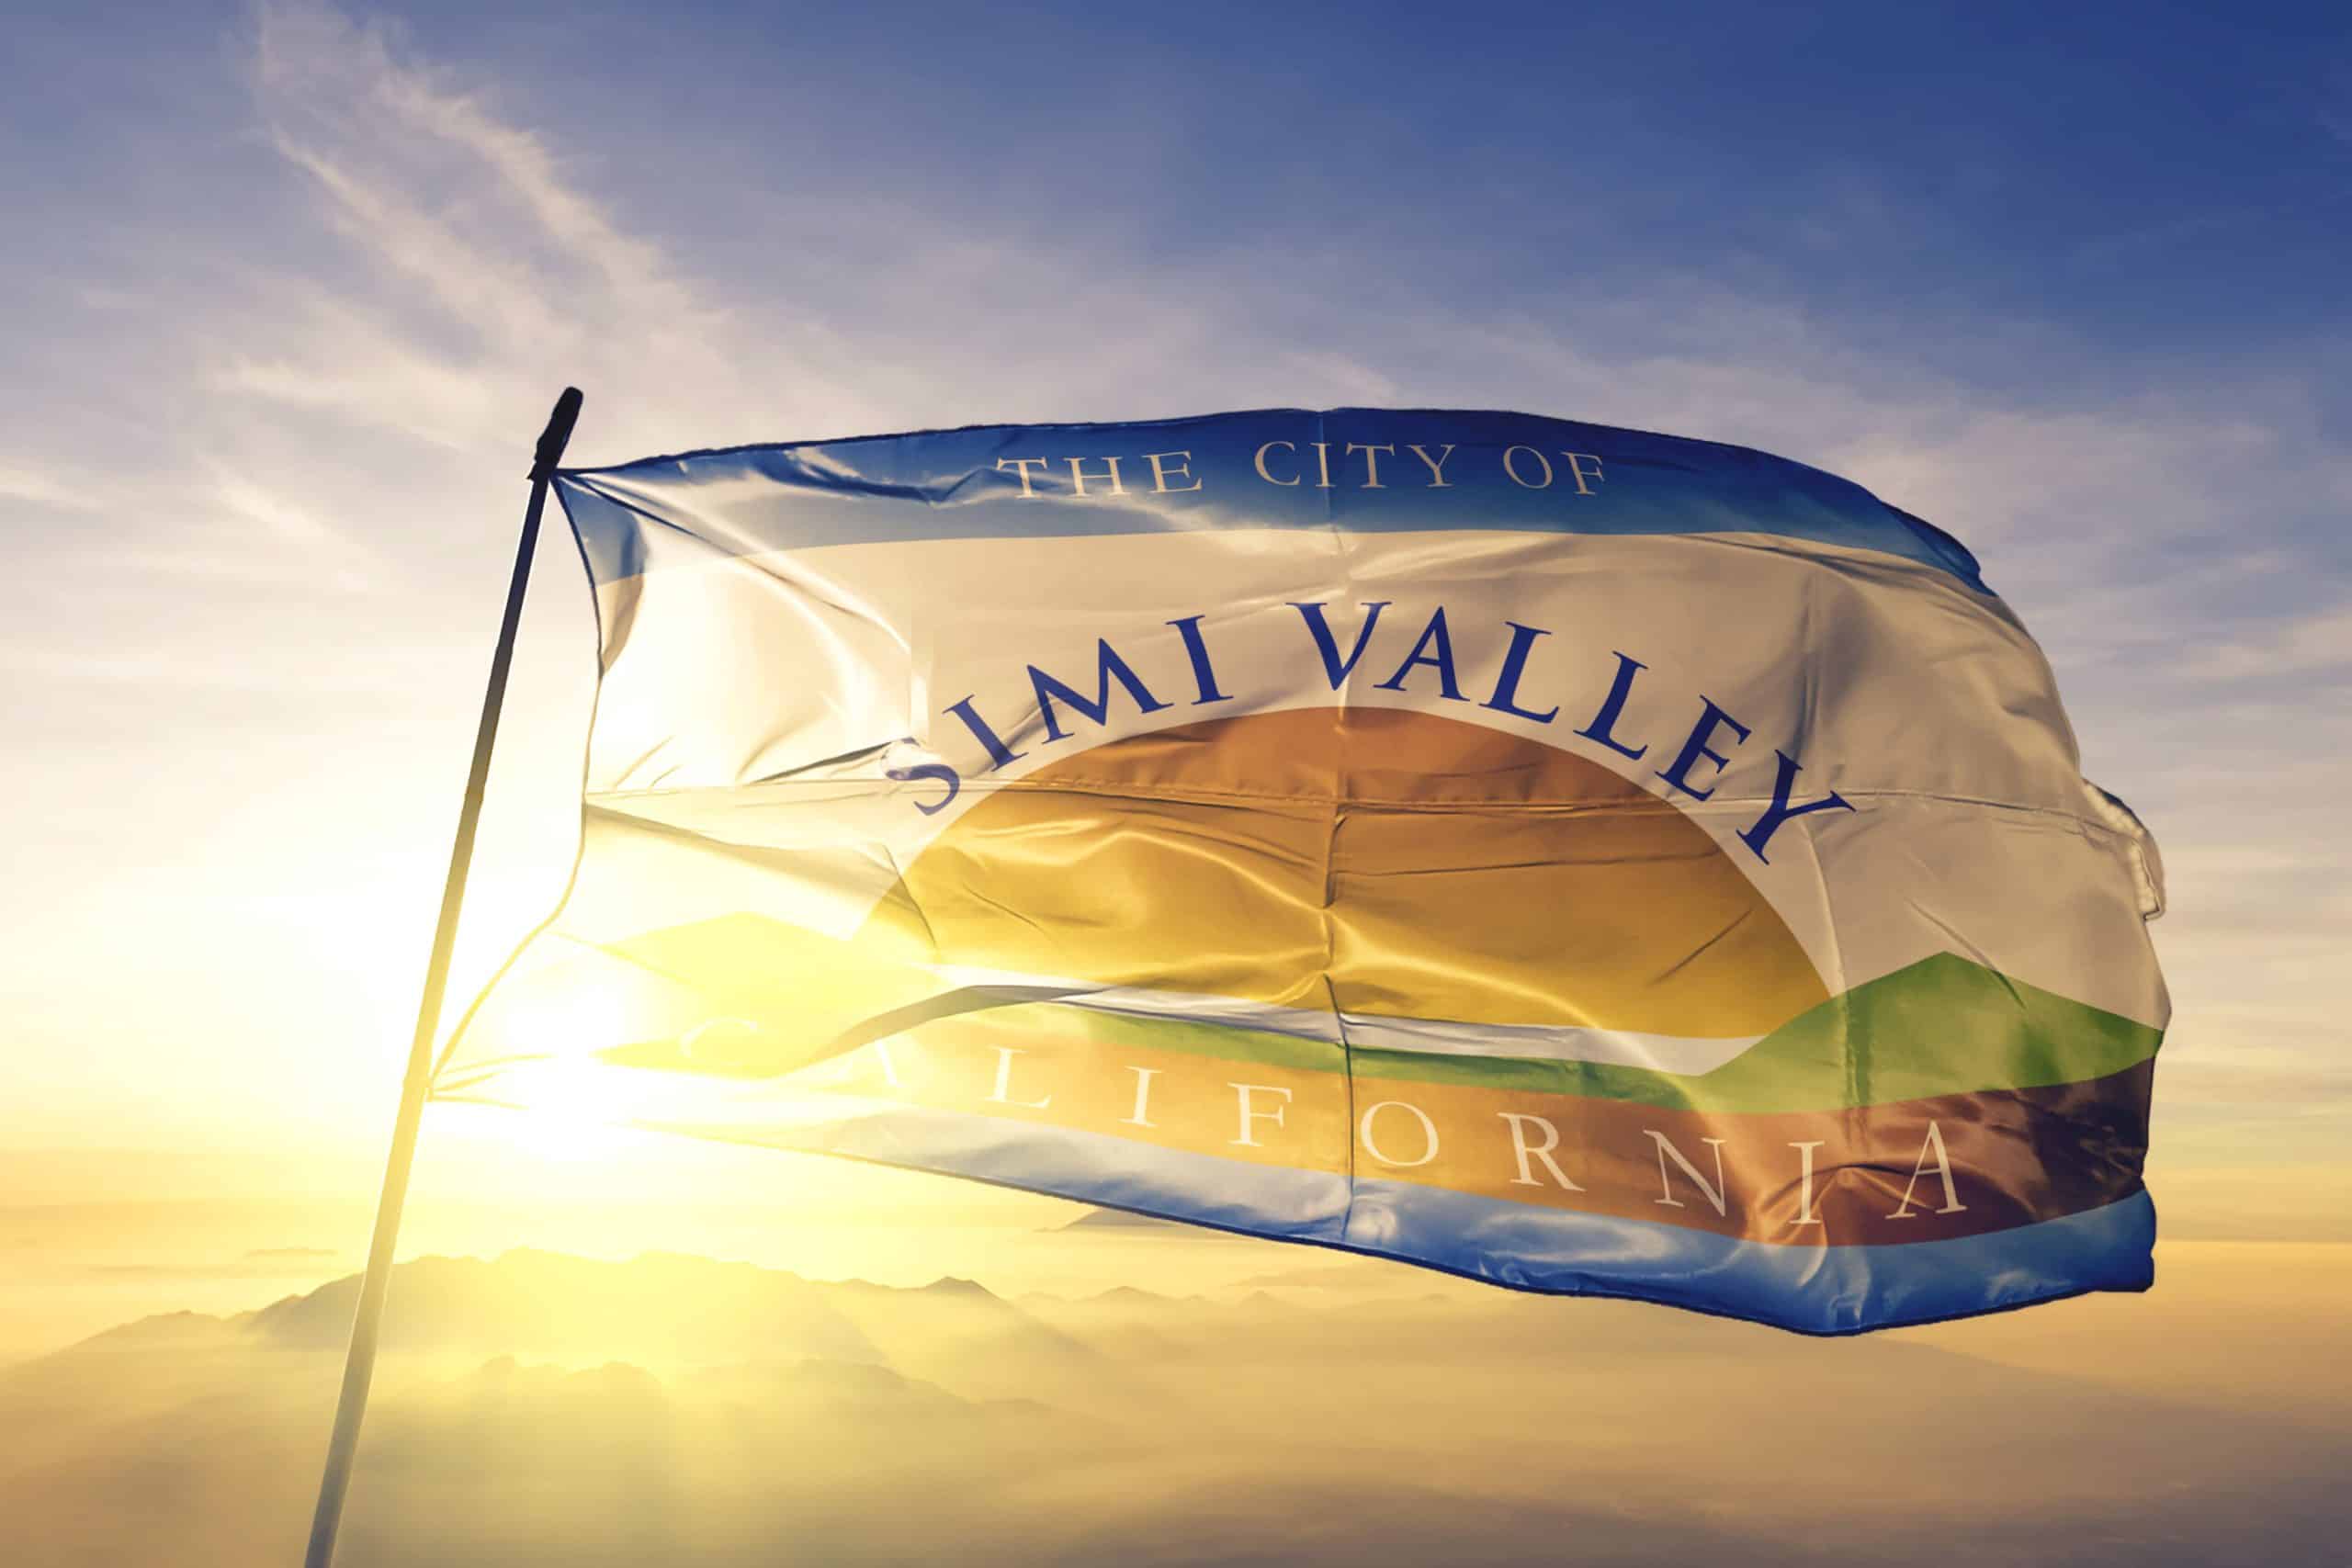 Simi Valley California